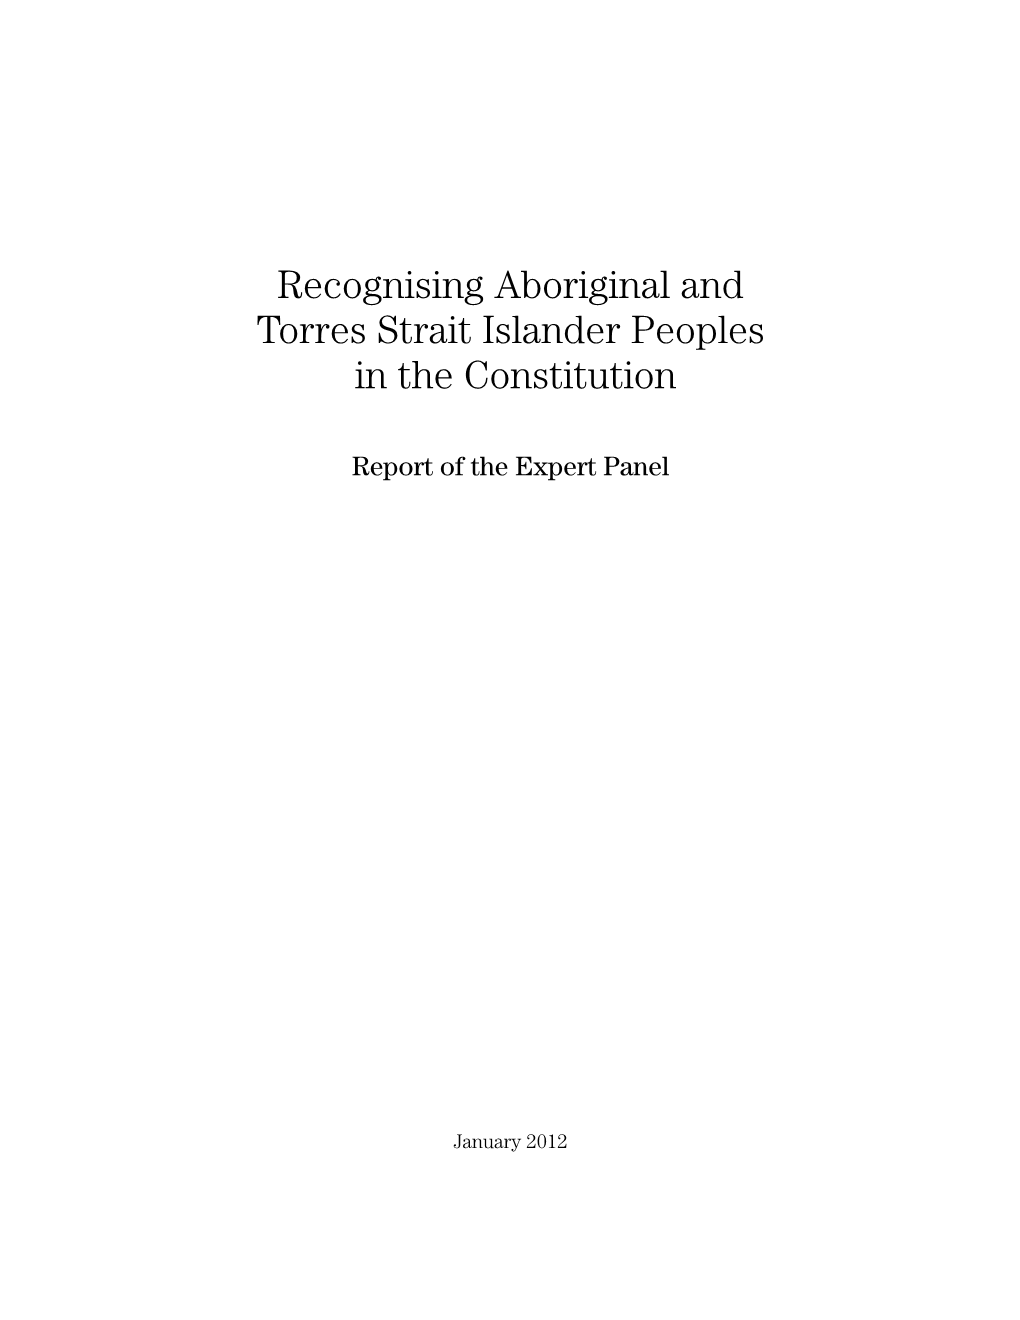 Recognising Aboriginal and Torres Strait Islander Peoples in the Constitution